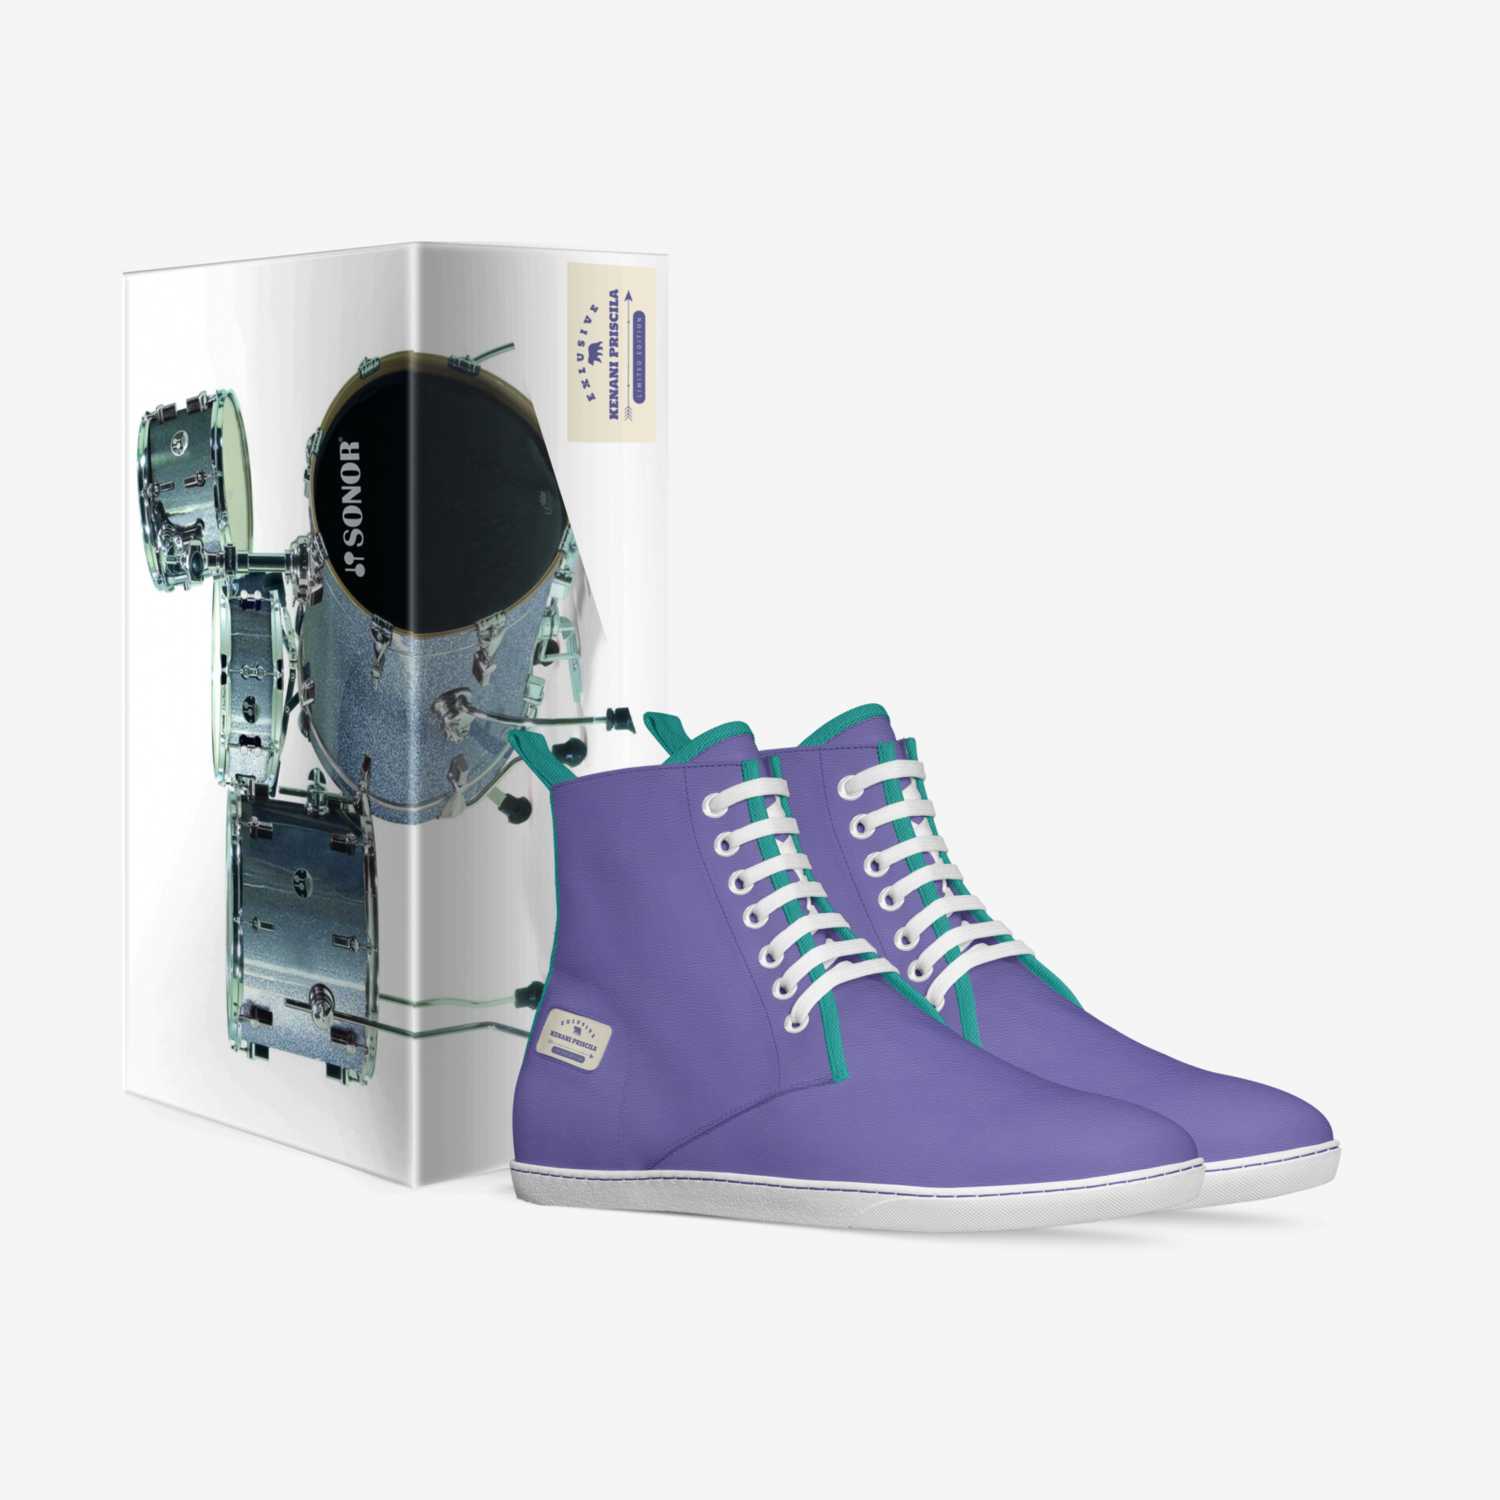 Kenanipriscila custom made in Italy shoes by Kenani Boni | Box view